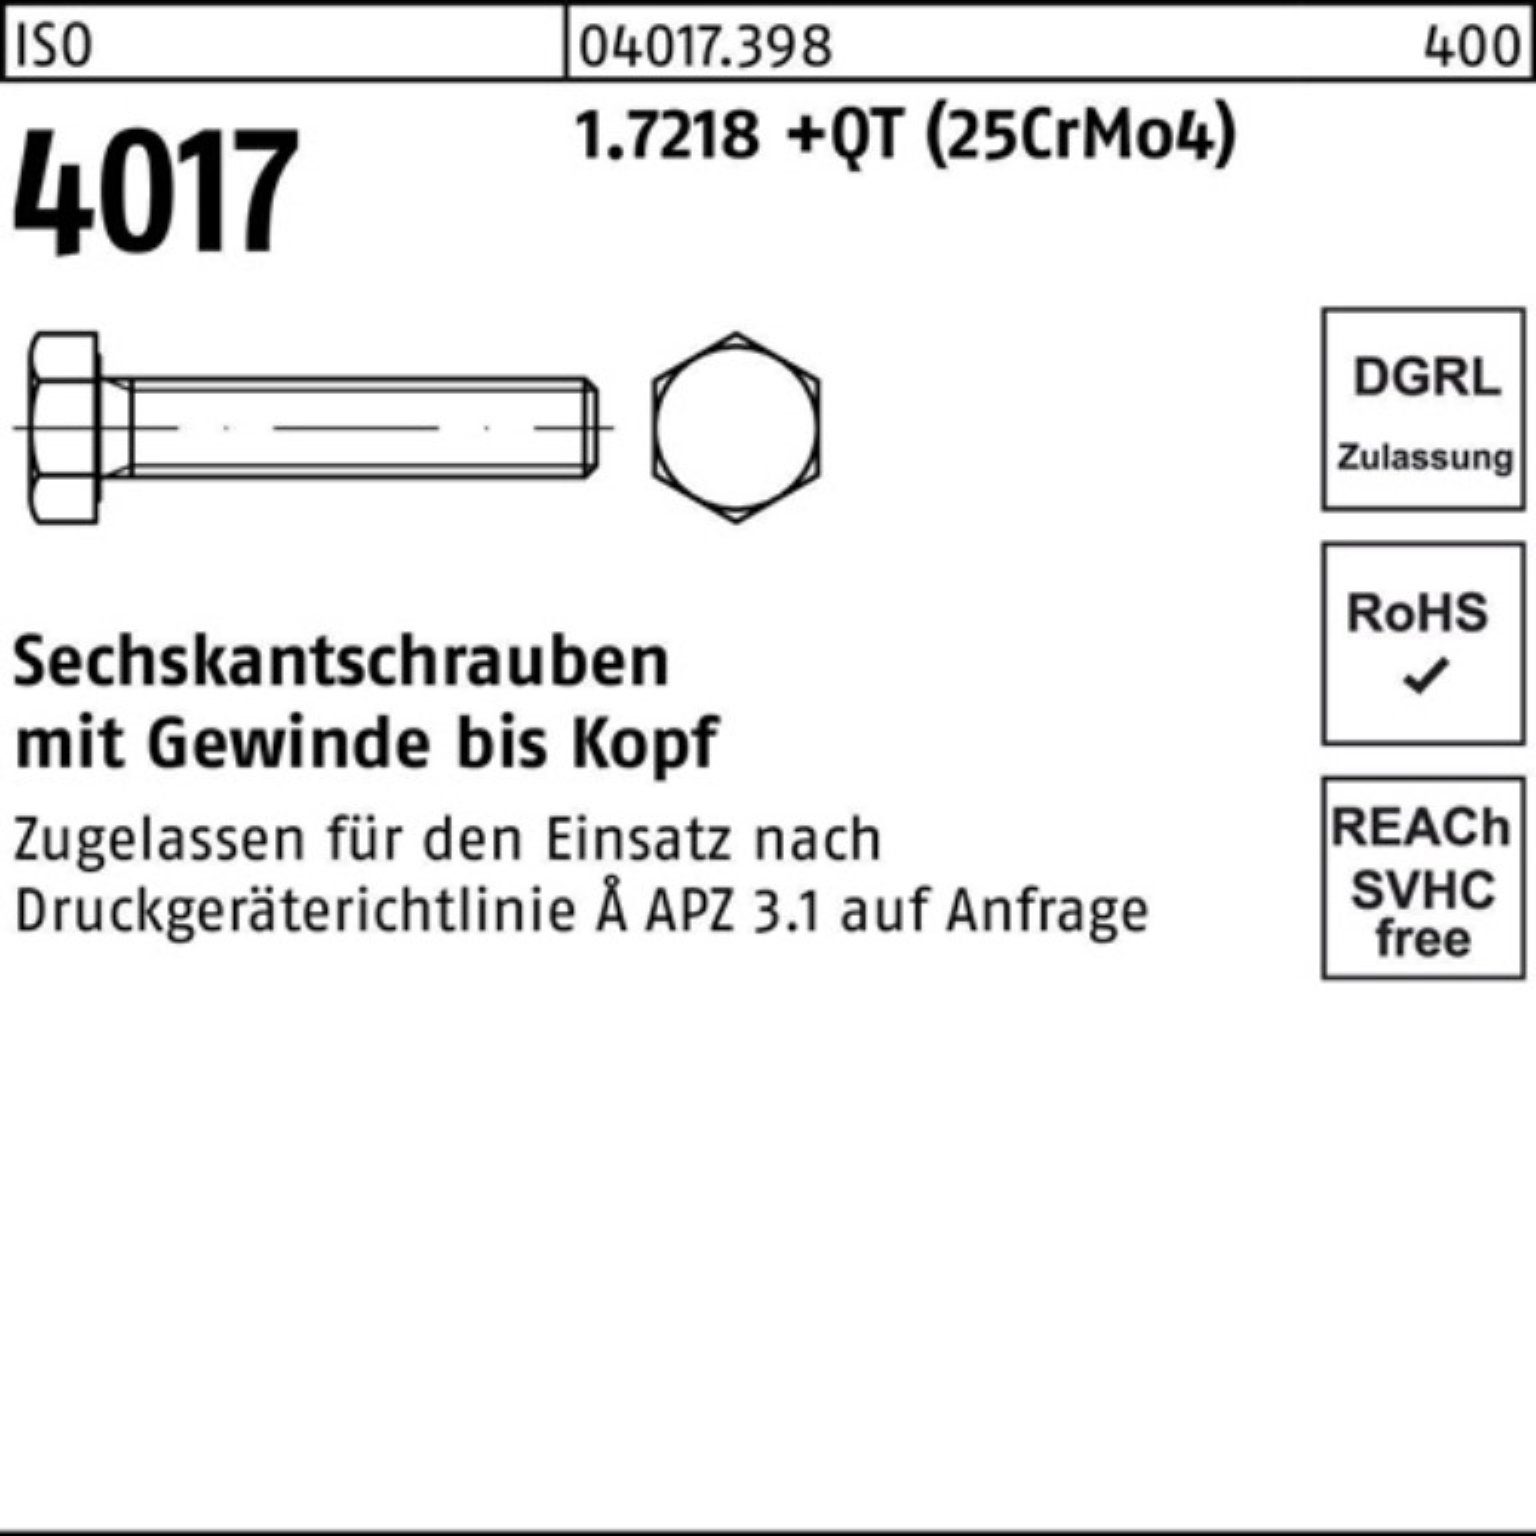 Bufab Sechskantschraube 100er Pack VG (25CrMo4) +QT ISO Sechskantschraube 80 M36x 1.7218 4017